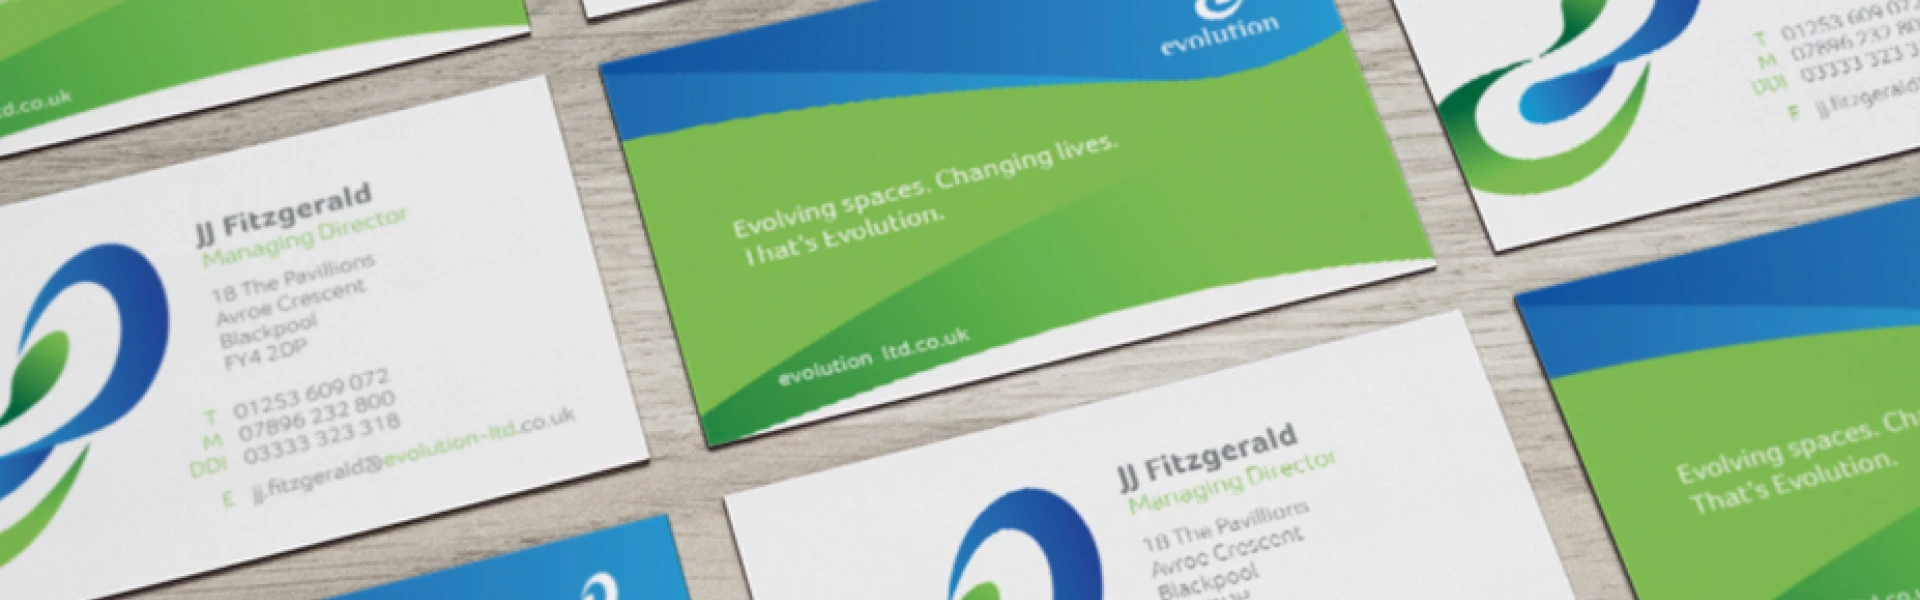 Evolution business cards